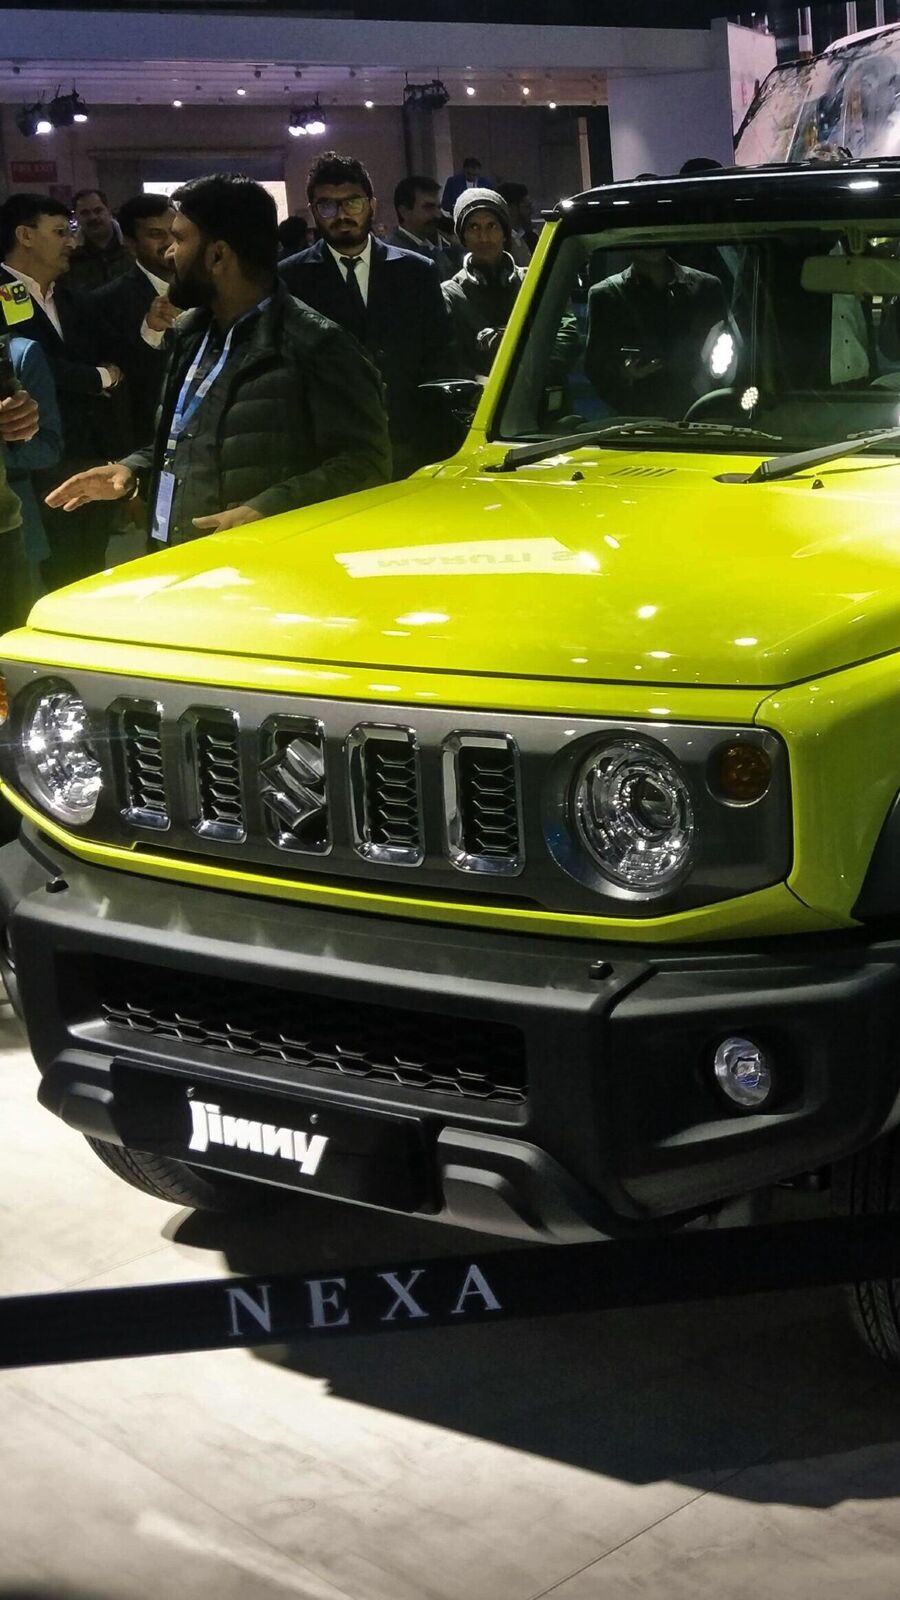 Maruti Suzuki readies Gurgaon plant for 5-door Jimny production